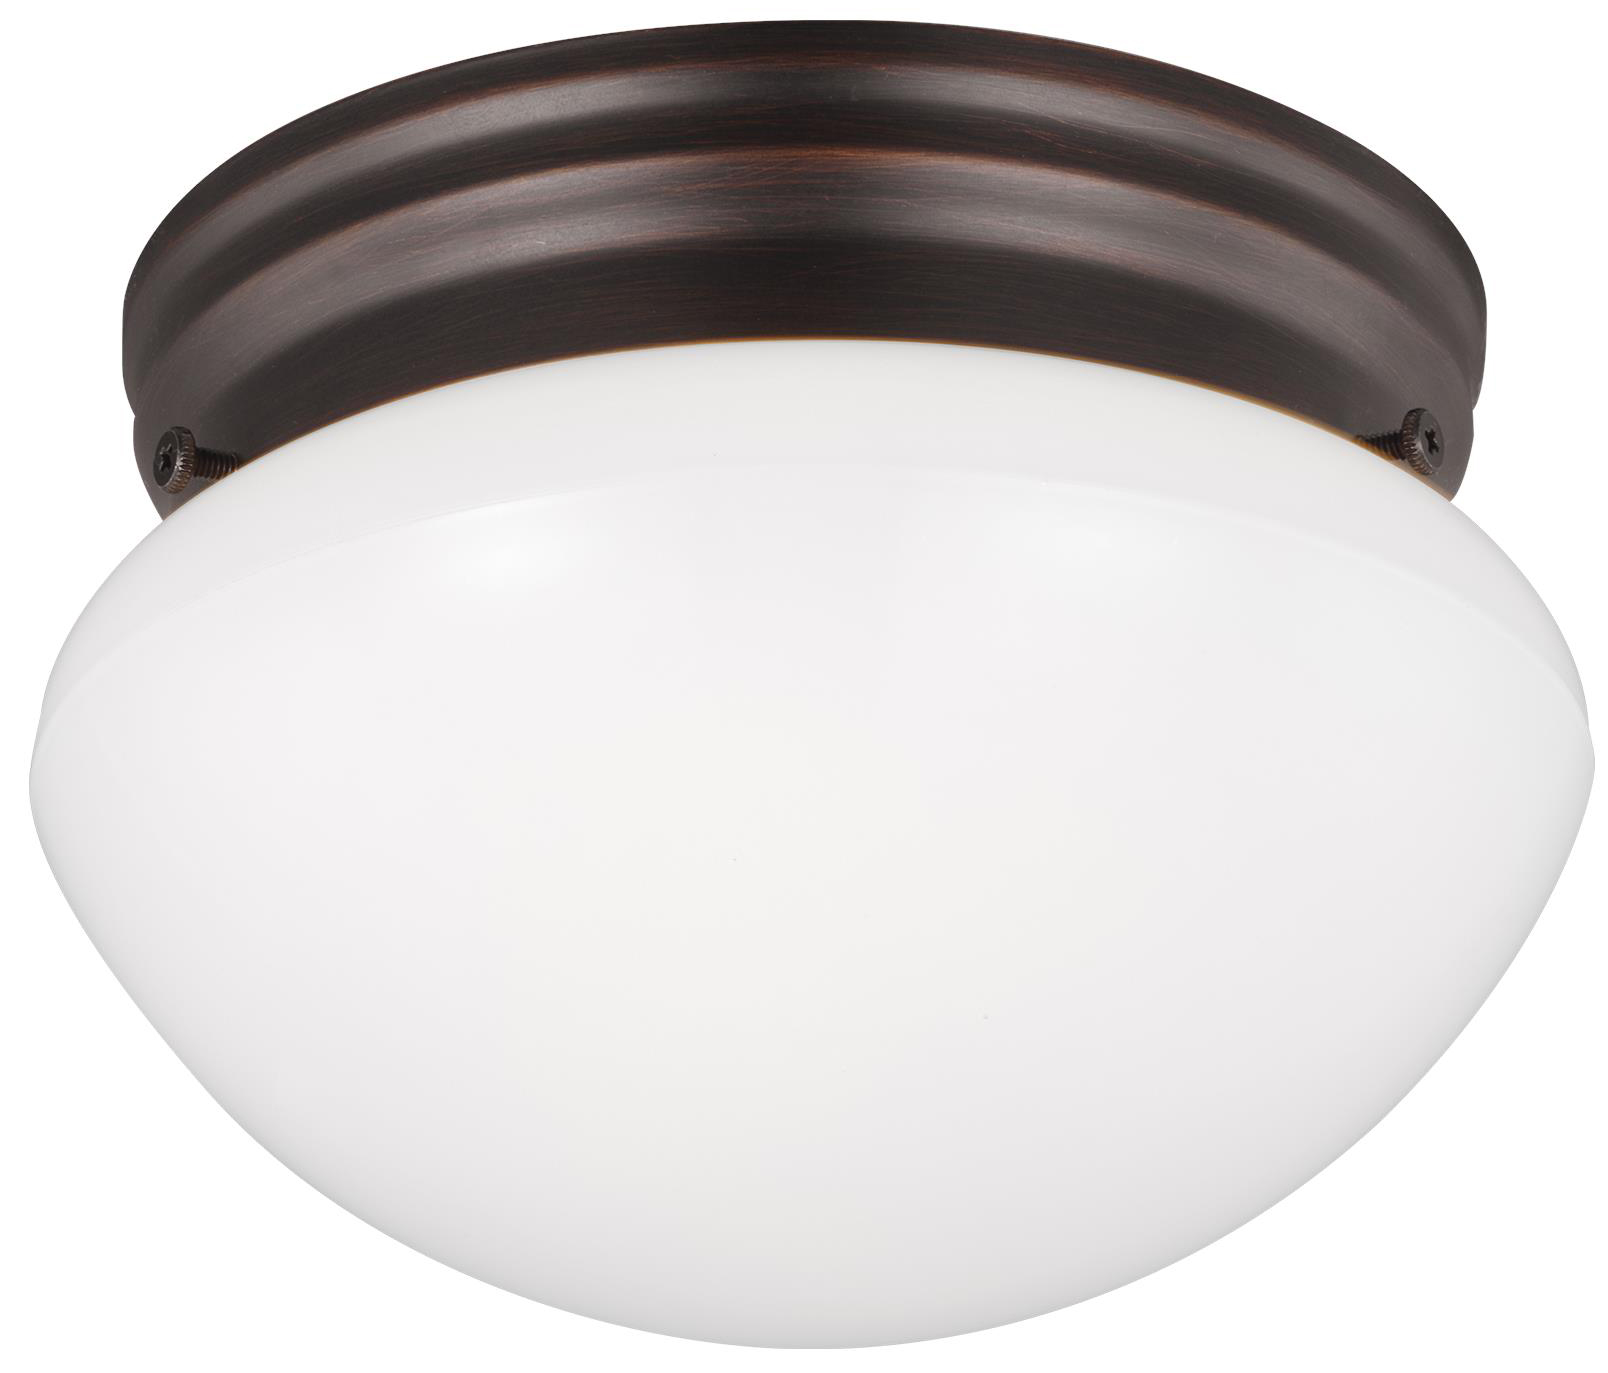 Webster Ceiling Light Fixture by Sea Gull Lighting | 5326-710 | SGL1026747